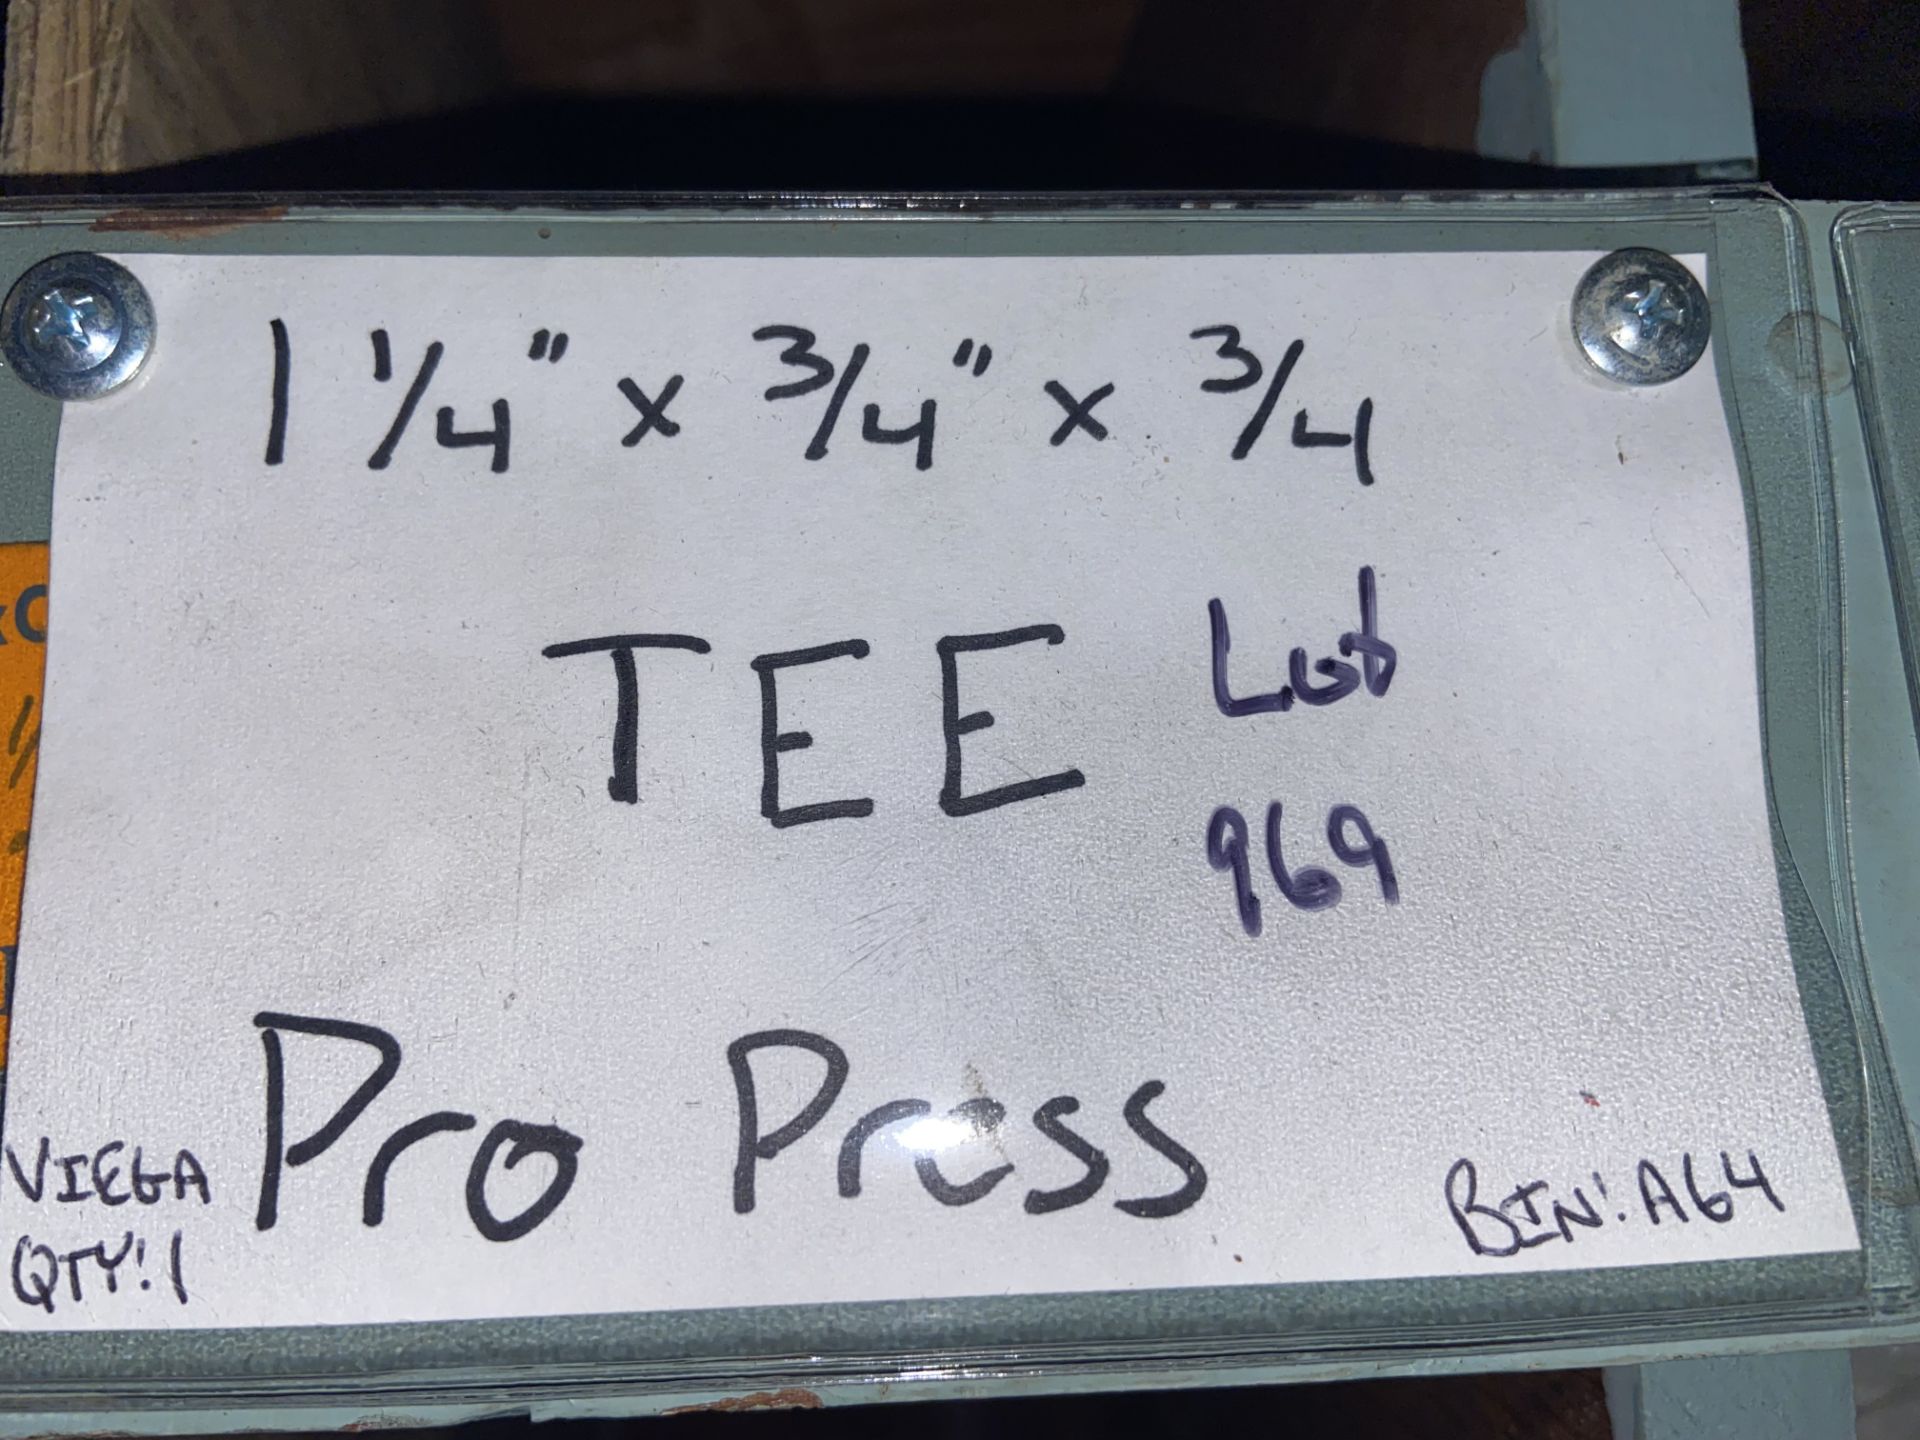 (1) VIEGA 2”x1 1/2” x 1 1/4” Tee Pro Press; (2) NIBCO 1 1/4” 1 1/4”x 1/2” Tee Pro Press; VIEGA (1) - Image 26 of 33